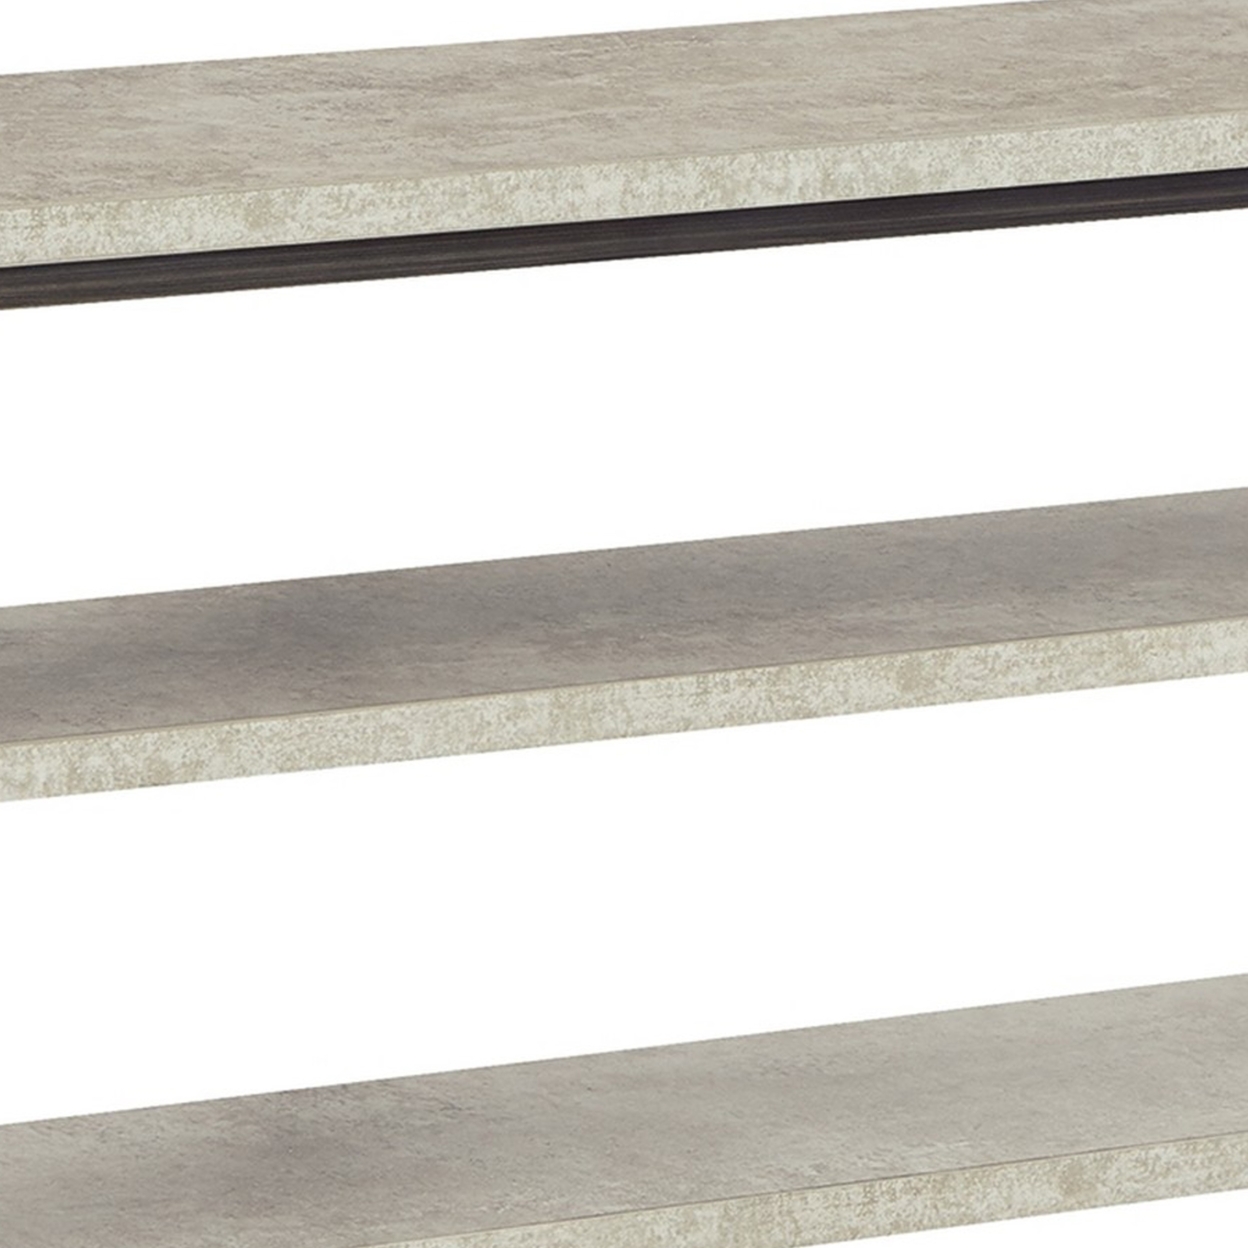 47 Inch Sofa Console Table, 2 Open Shelves, Faux Concrete Melamine Finish- Saltoro Sherpi